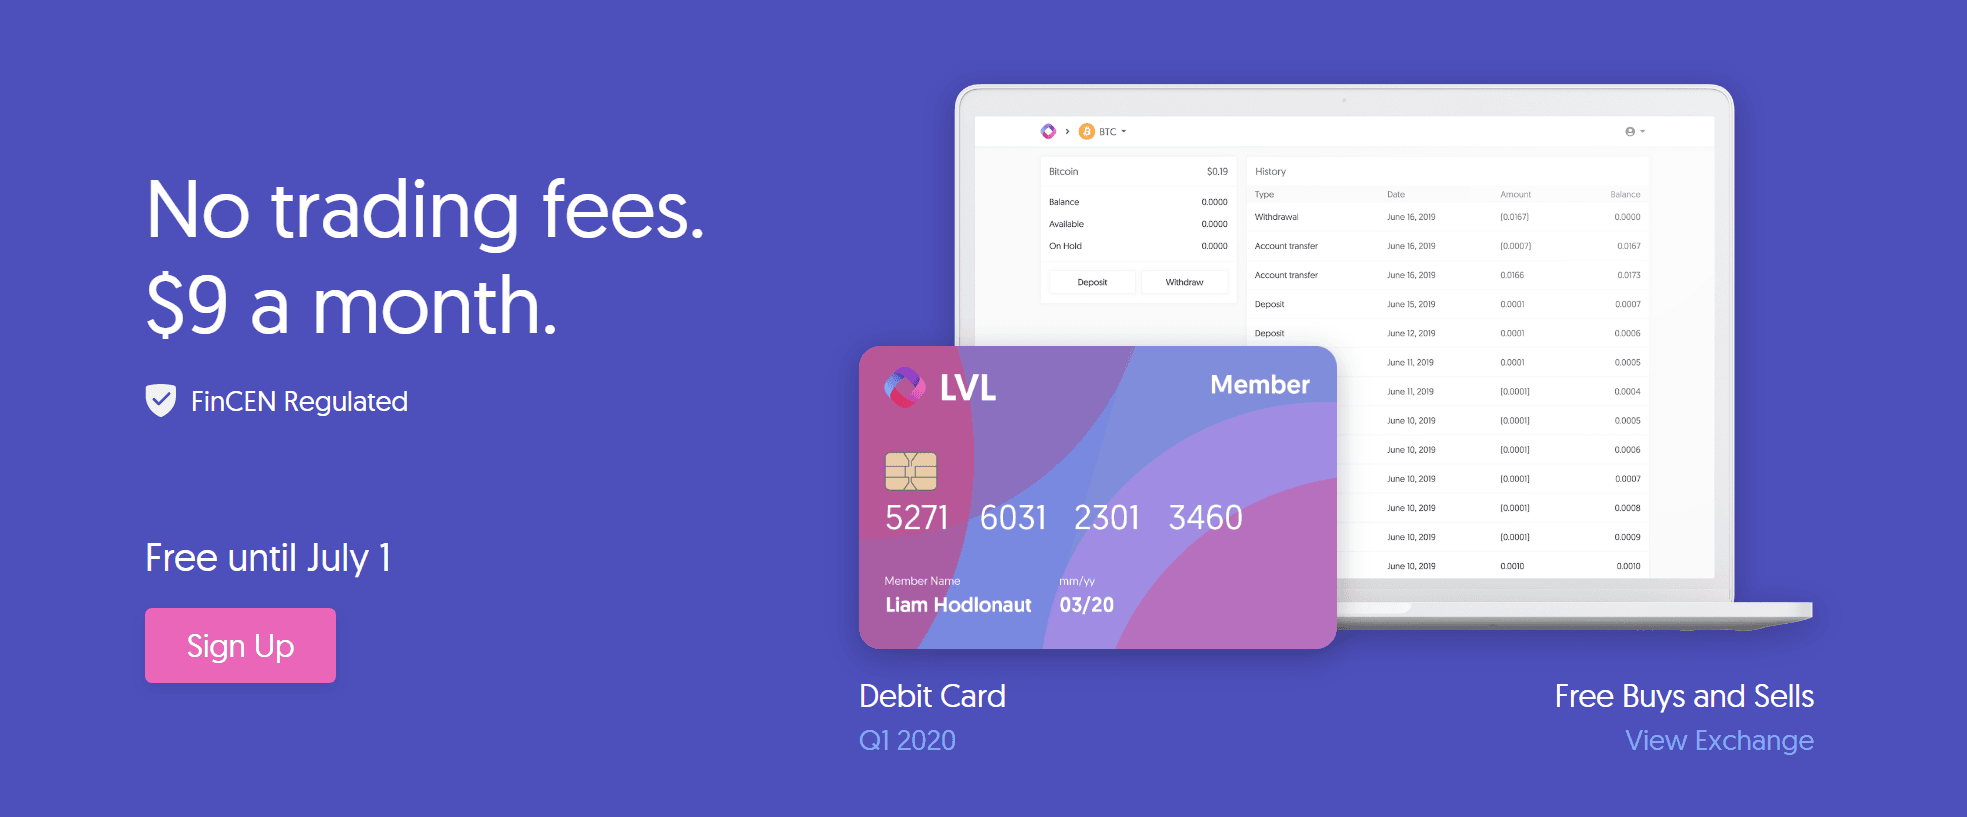 Join LVL - No Trading Fees